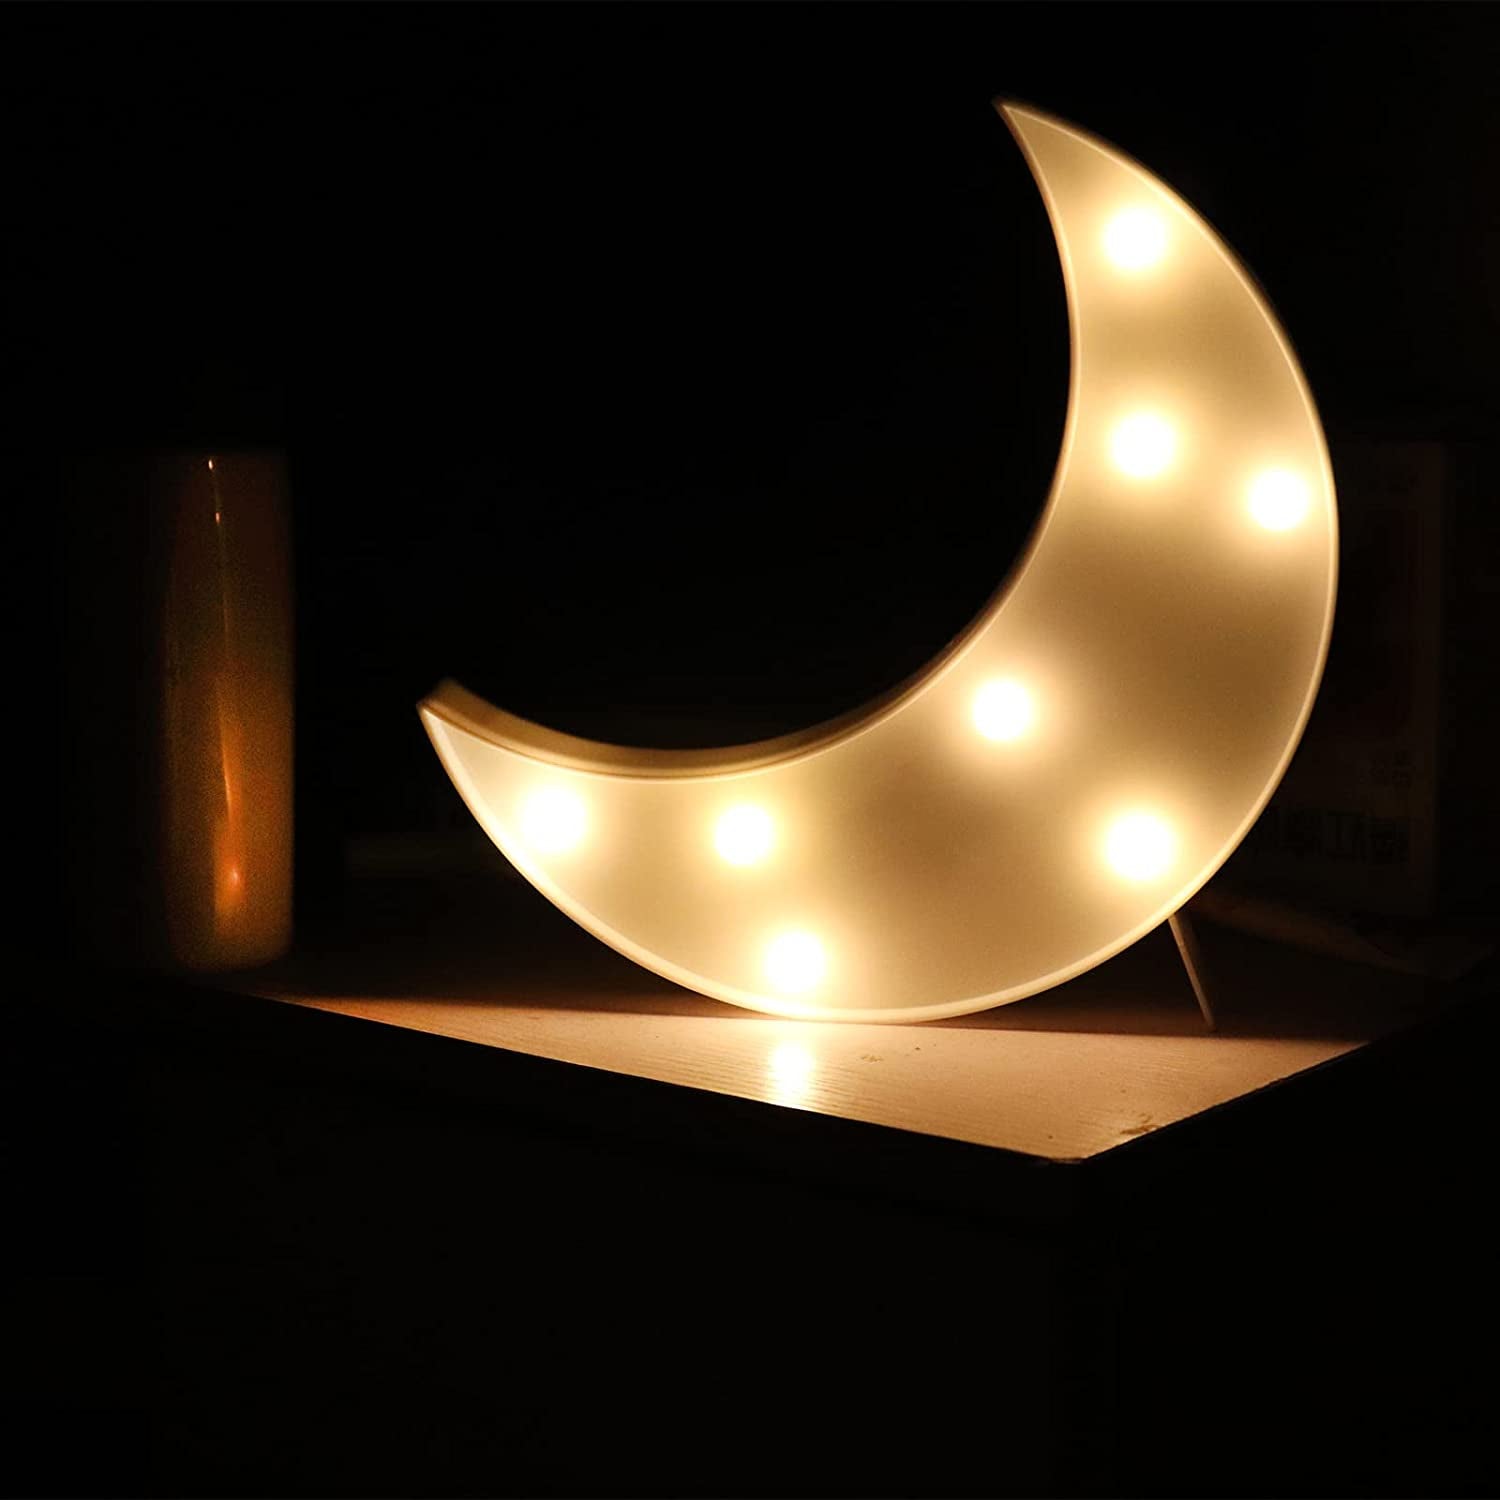 3 PCS 3D Crescent Moon Light Cloud Led Star Lamp, Decorative Night Lights Room Decor Nightlight for Kids Adults Birthday Christmas Gifts